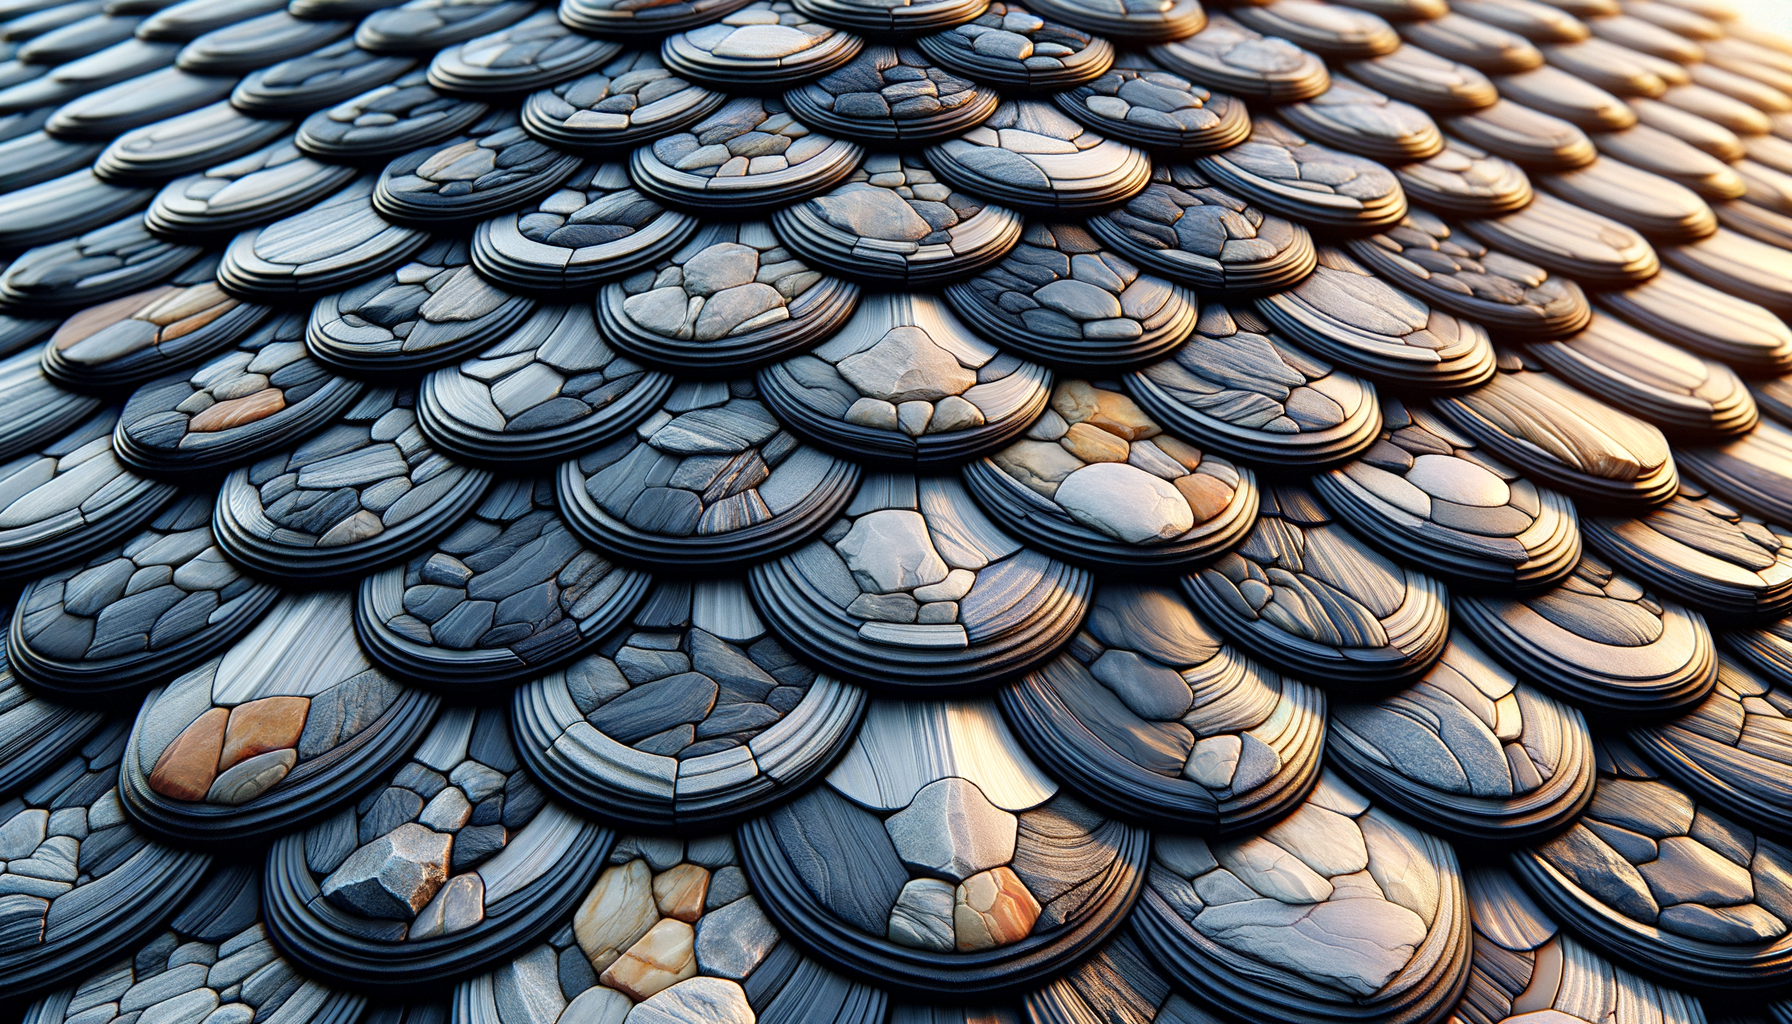 ALT: Close-up of Erie metal roofing tiles